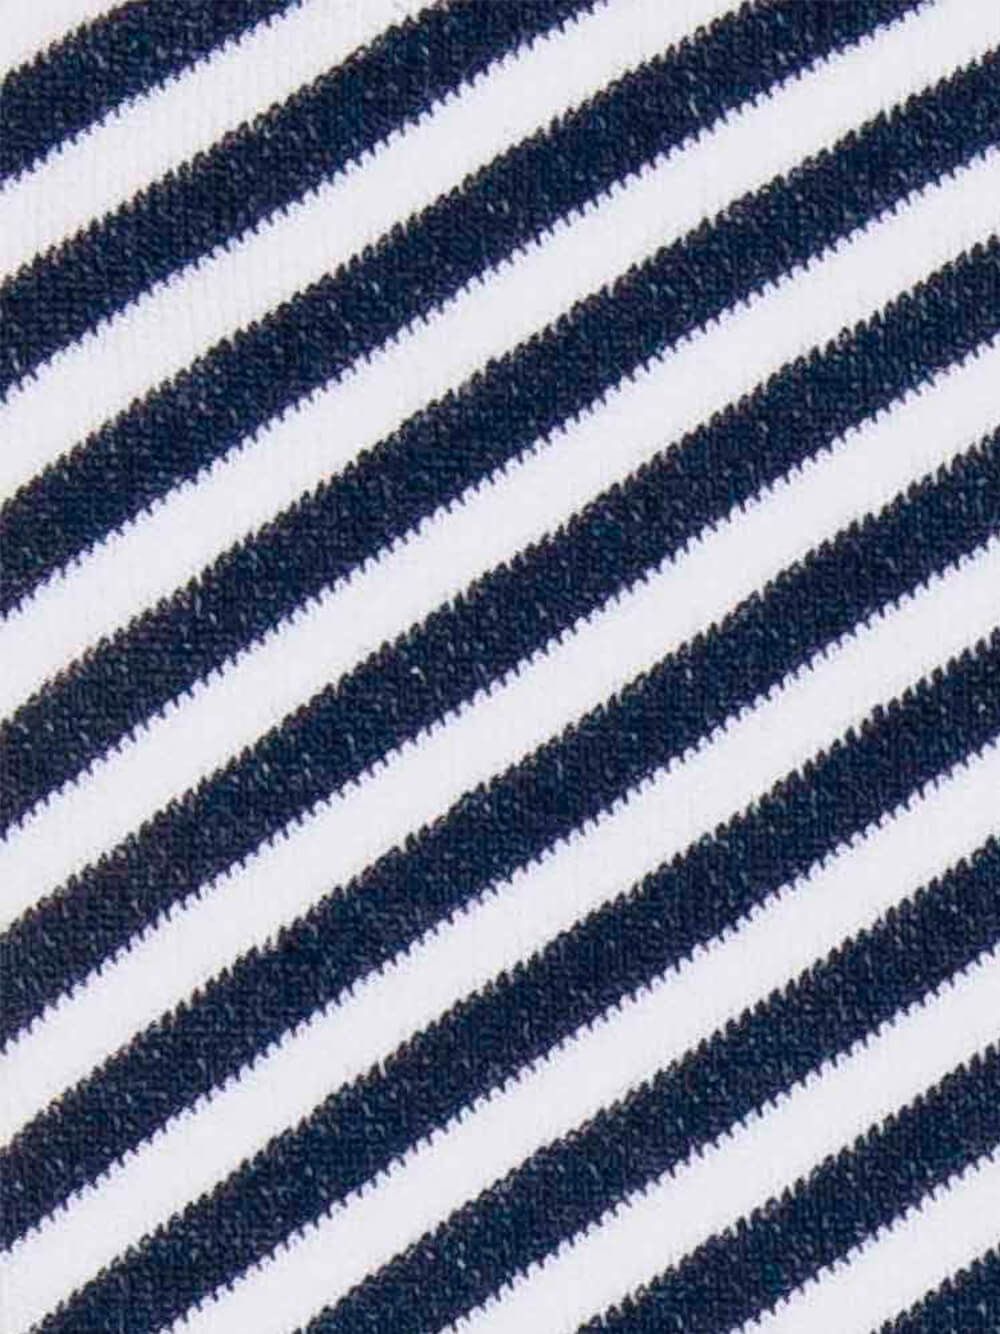 Marine Diagonal Striped Socks | Lolo Carolo